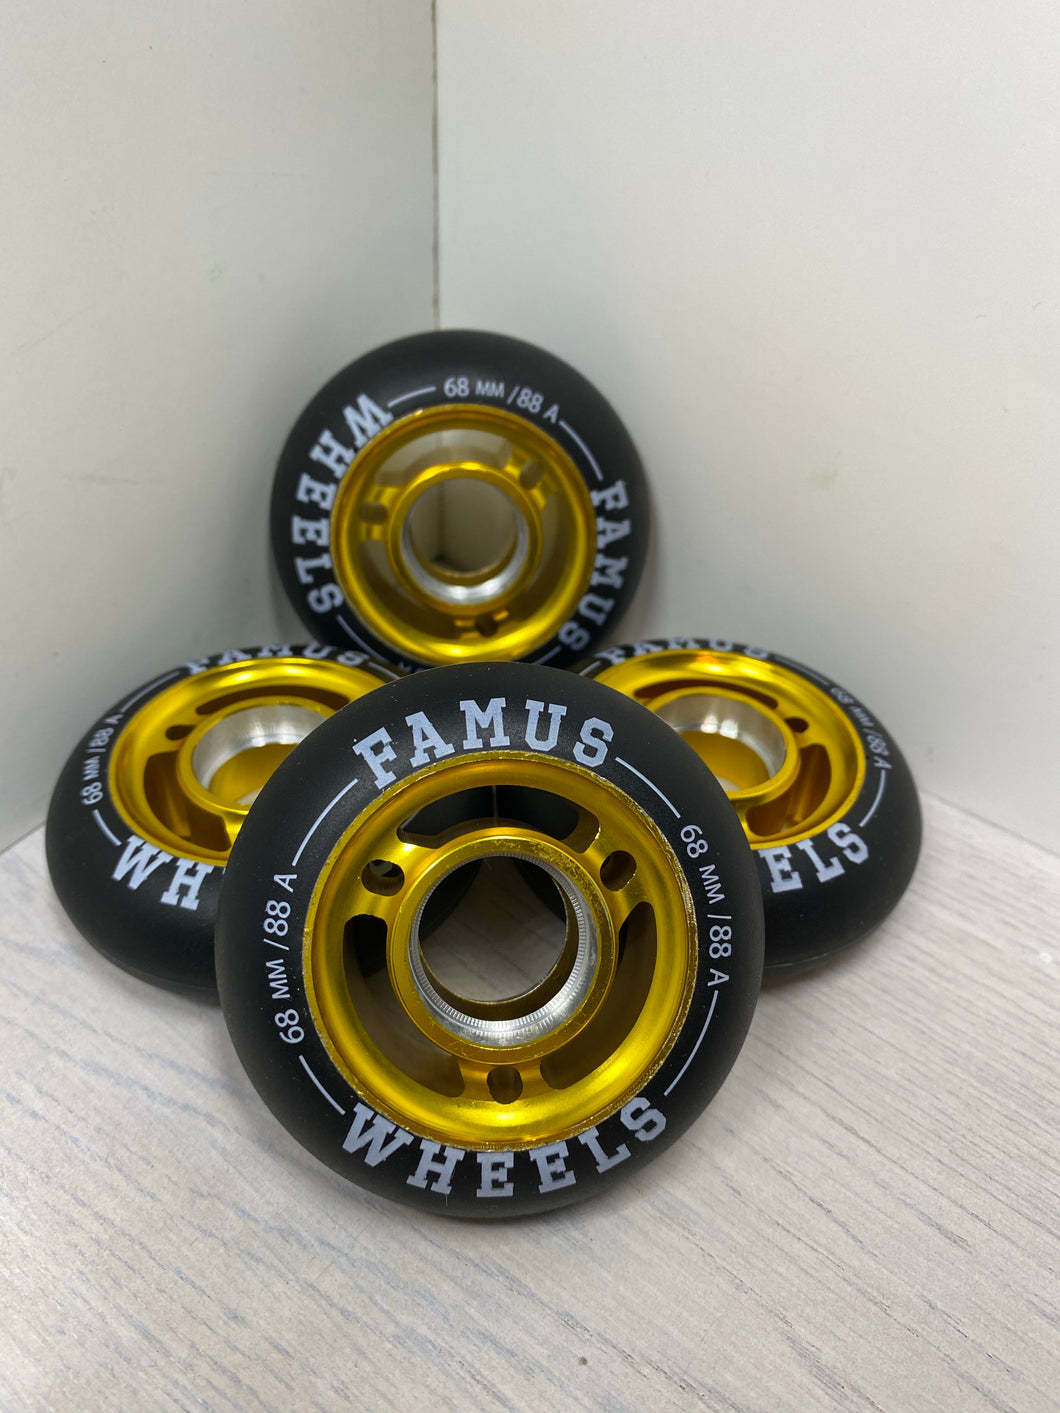 Famus Wheels 68mm/88a - furtive